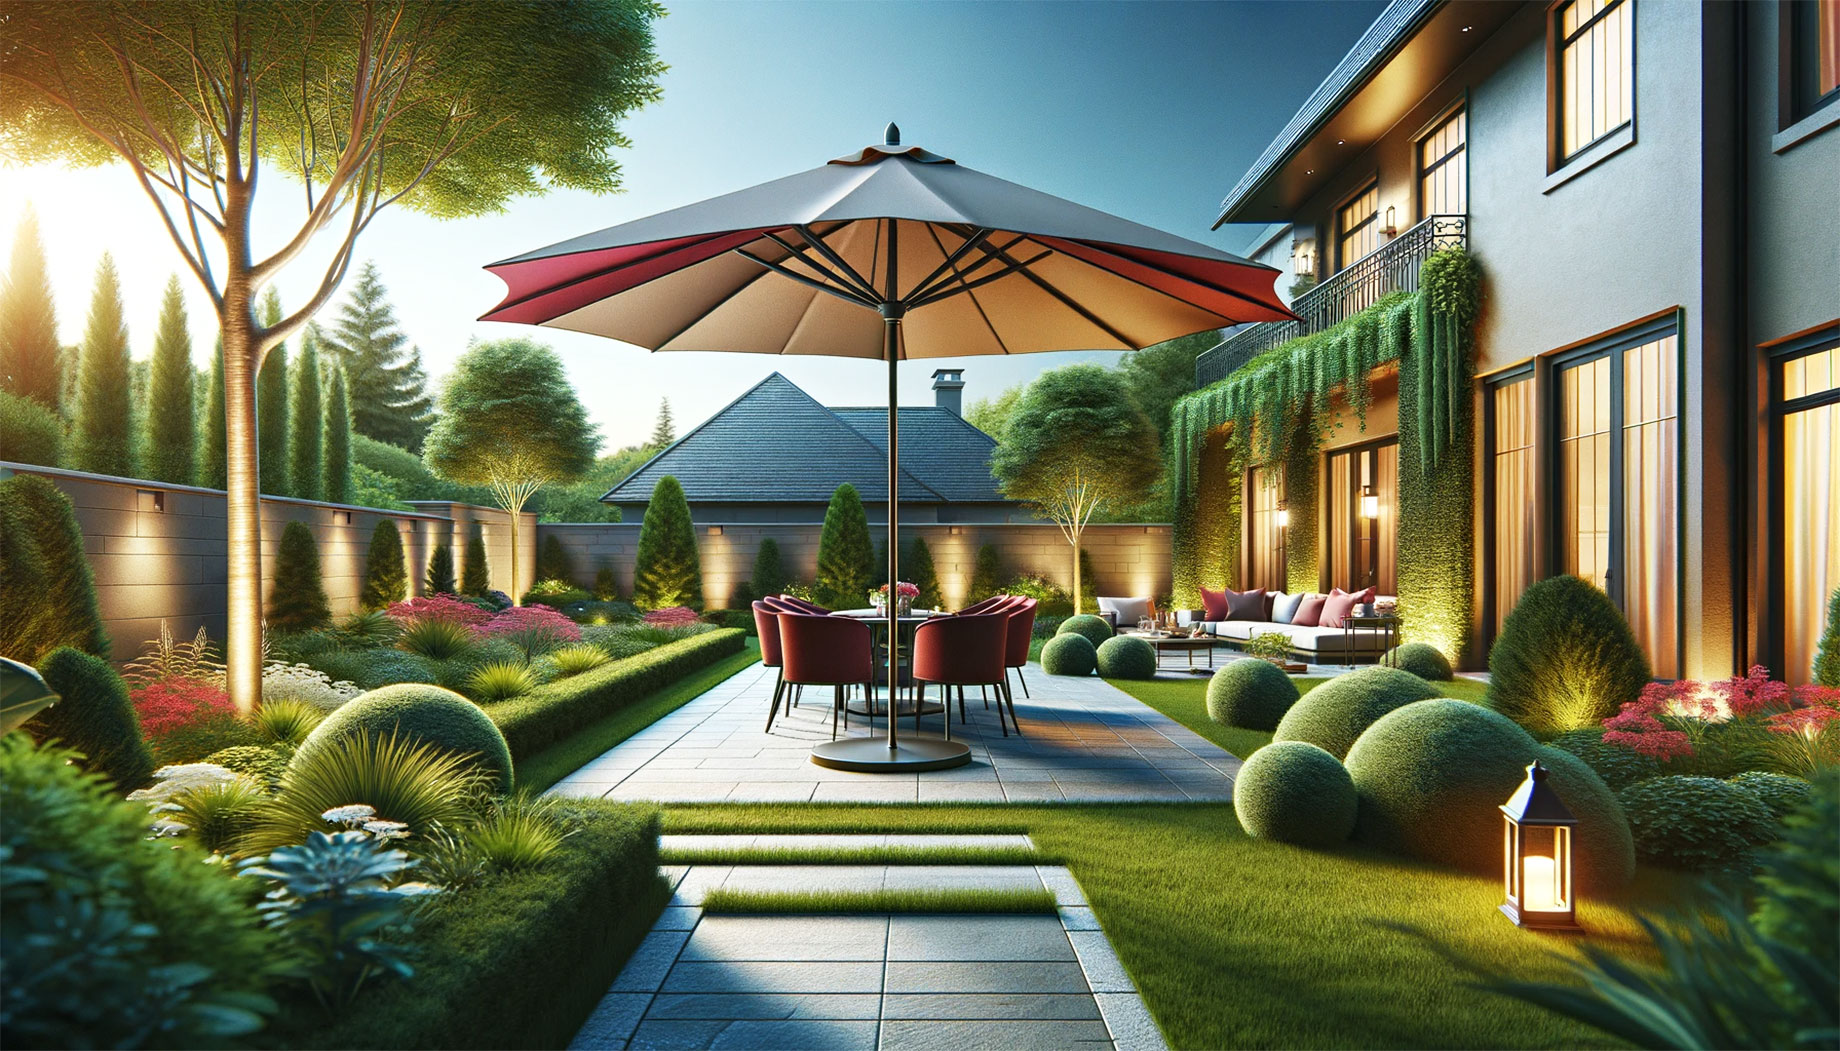 Luxury Home Backyard with Patio Set and Large Umbrella